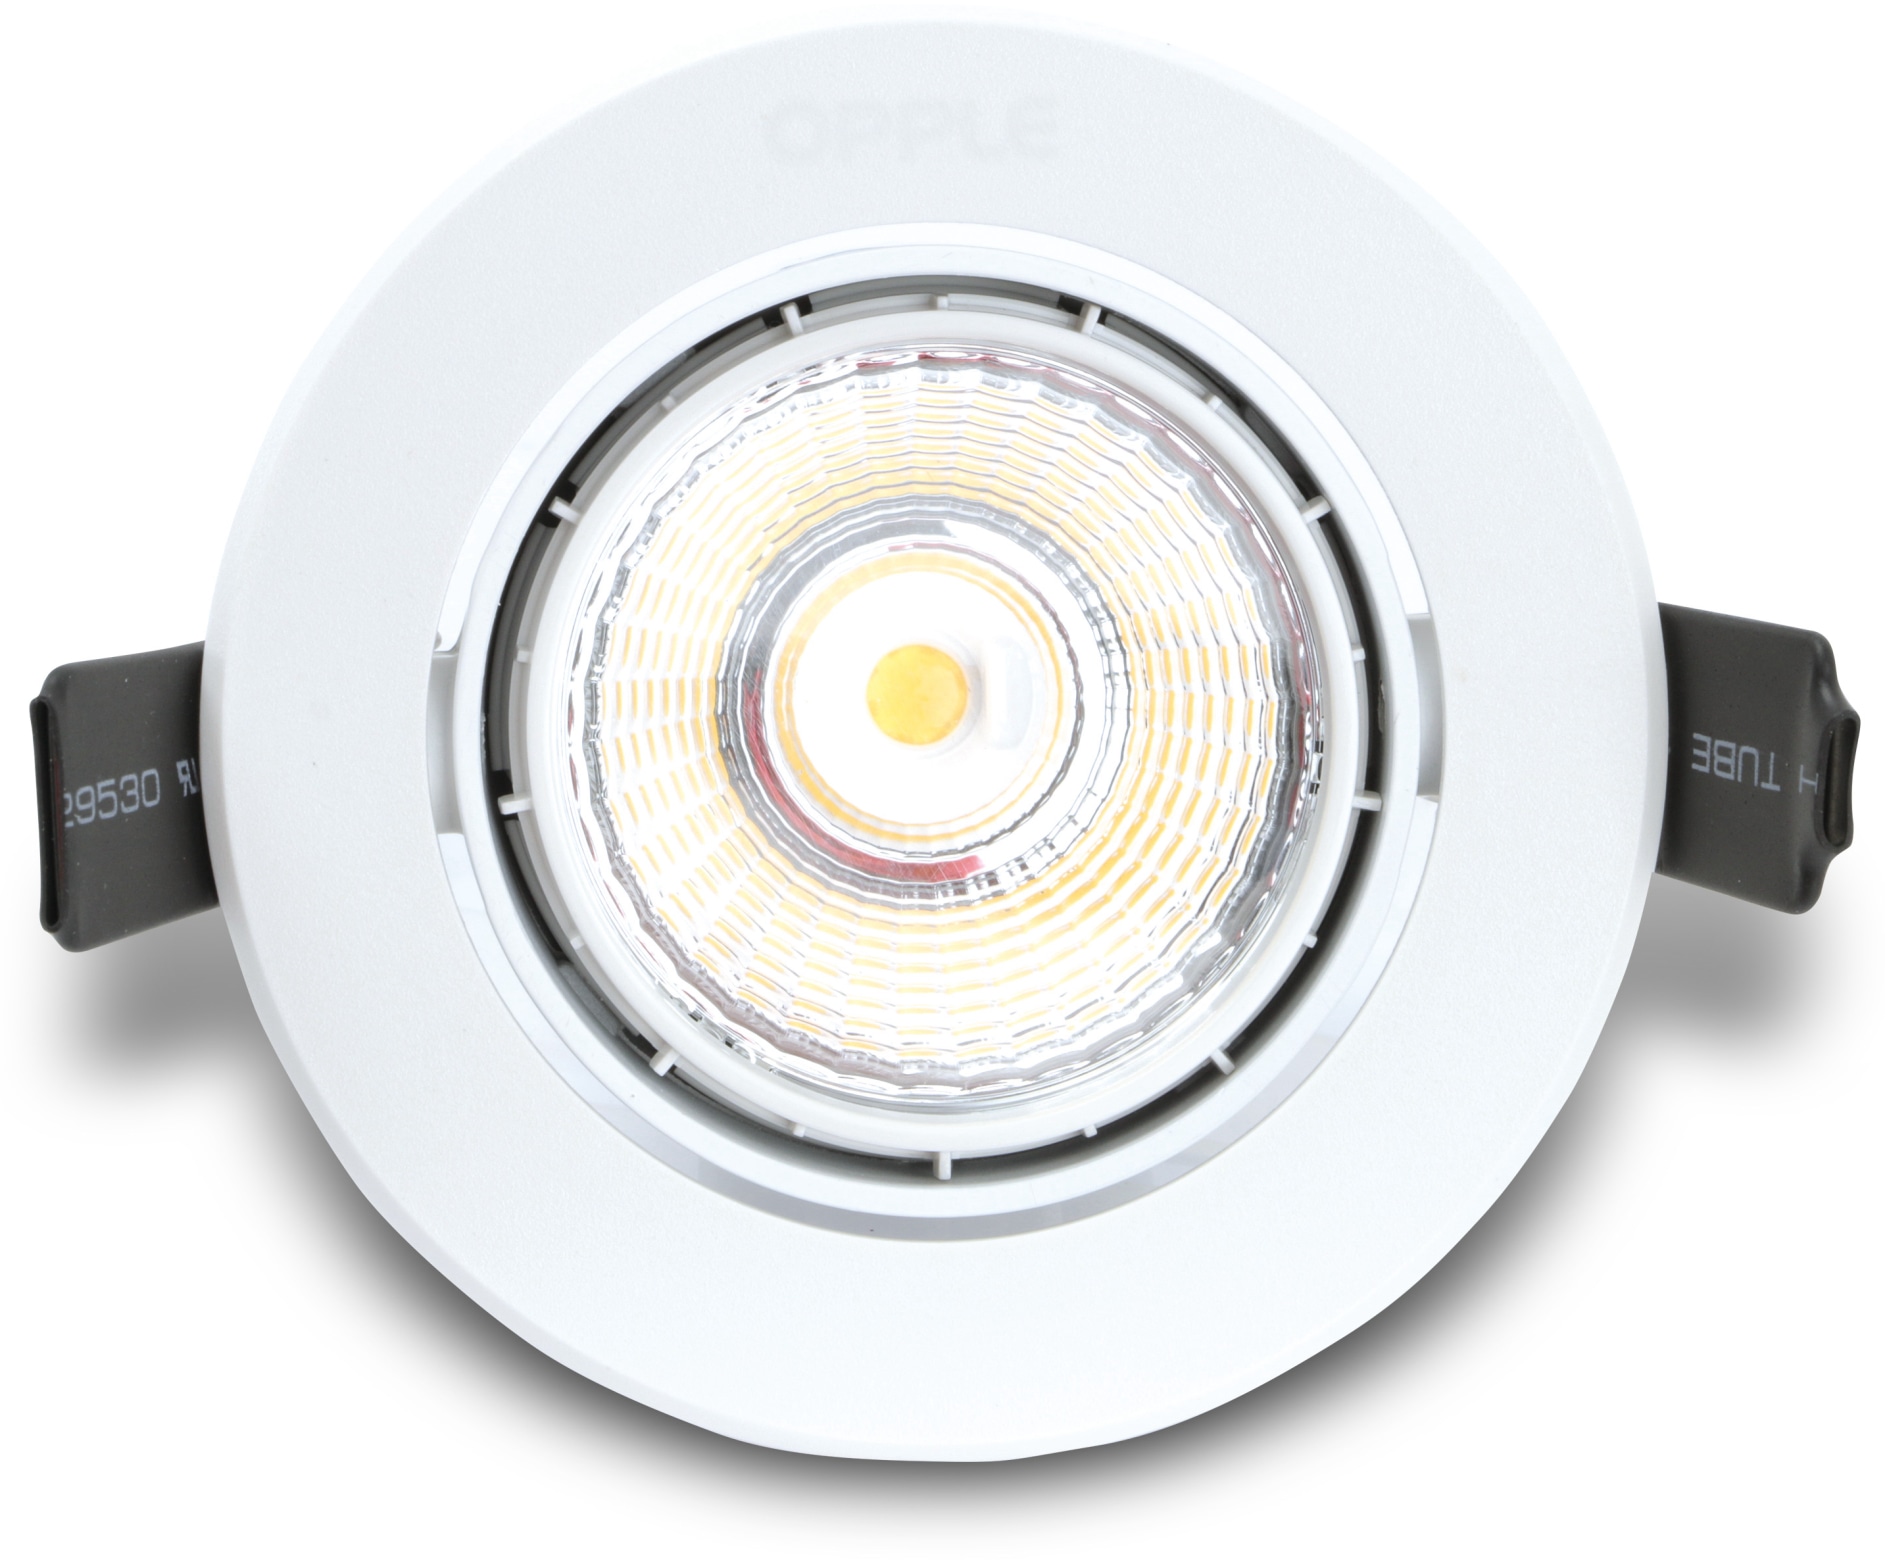 OPPLE LED-Deckeneinbauspot 140044122, 9,5 W, 640 lm, 4000 K, weiß